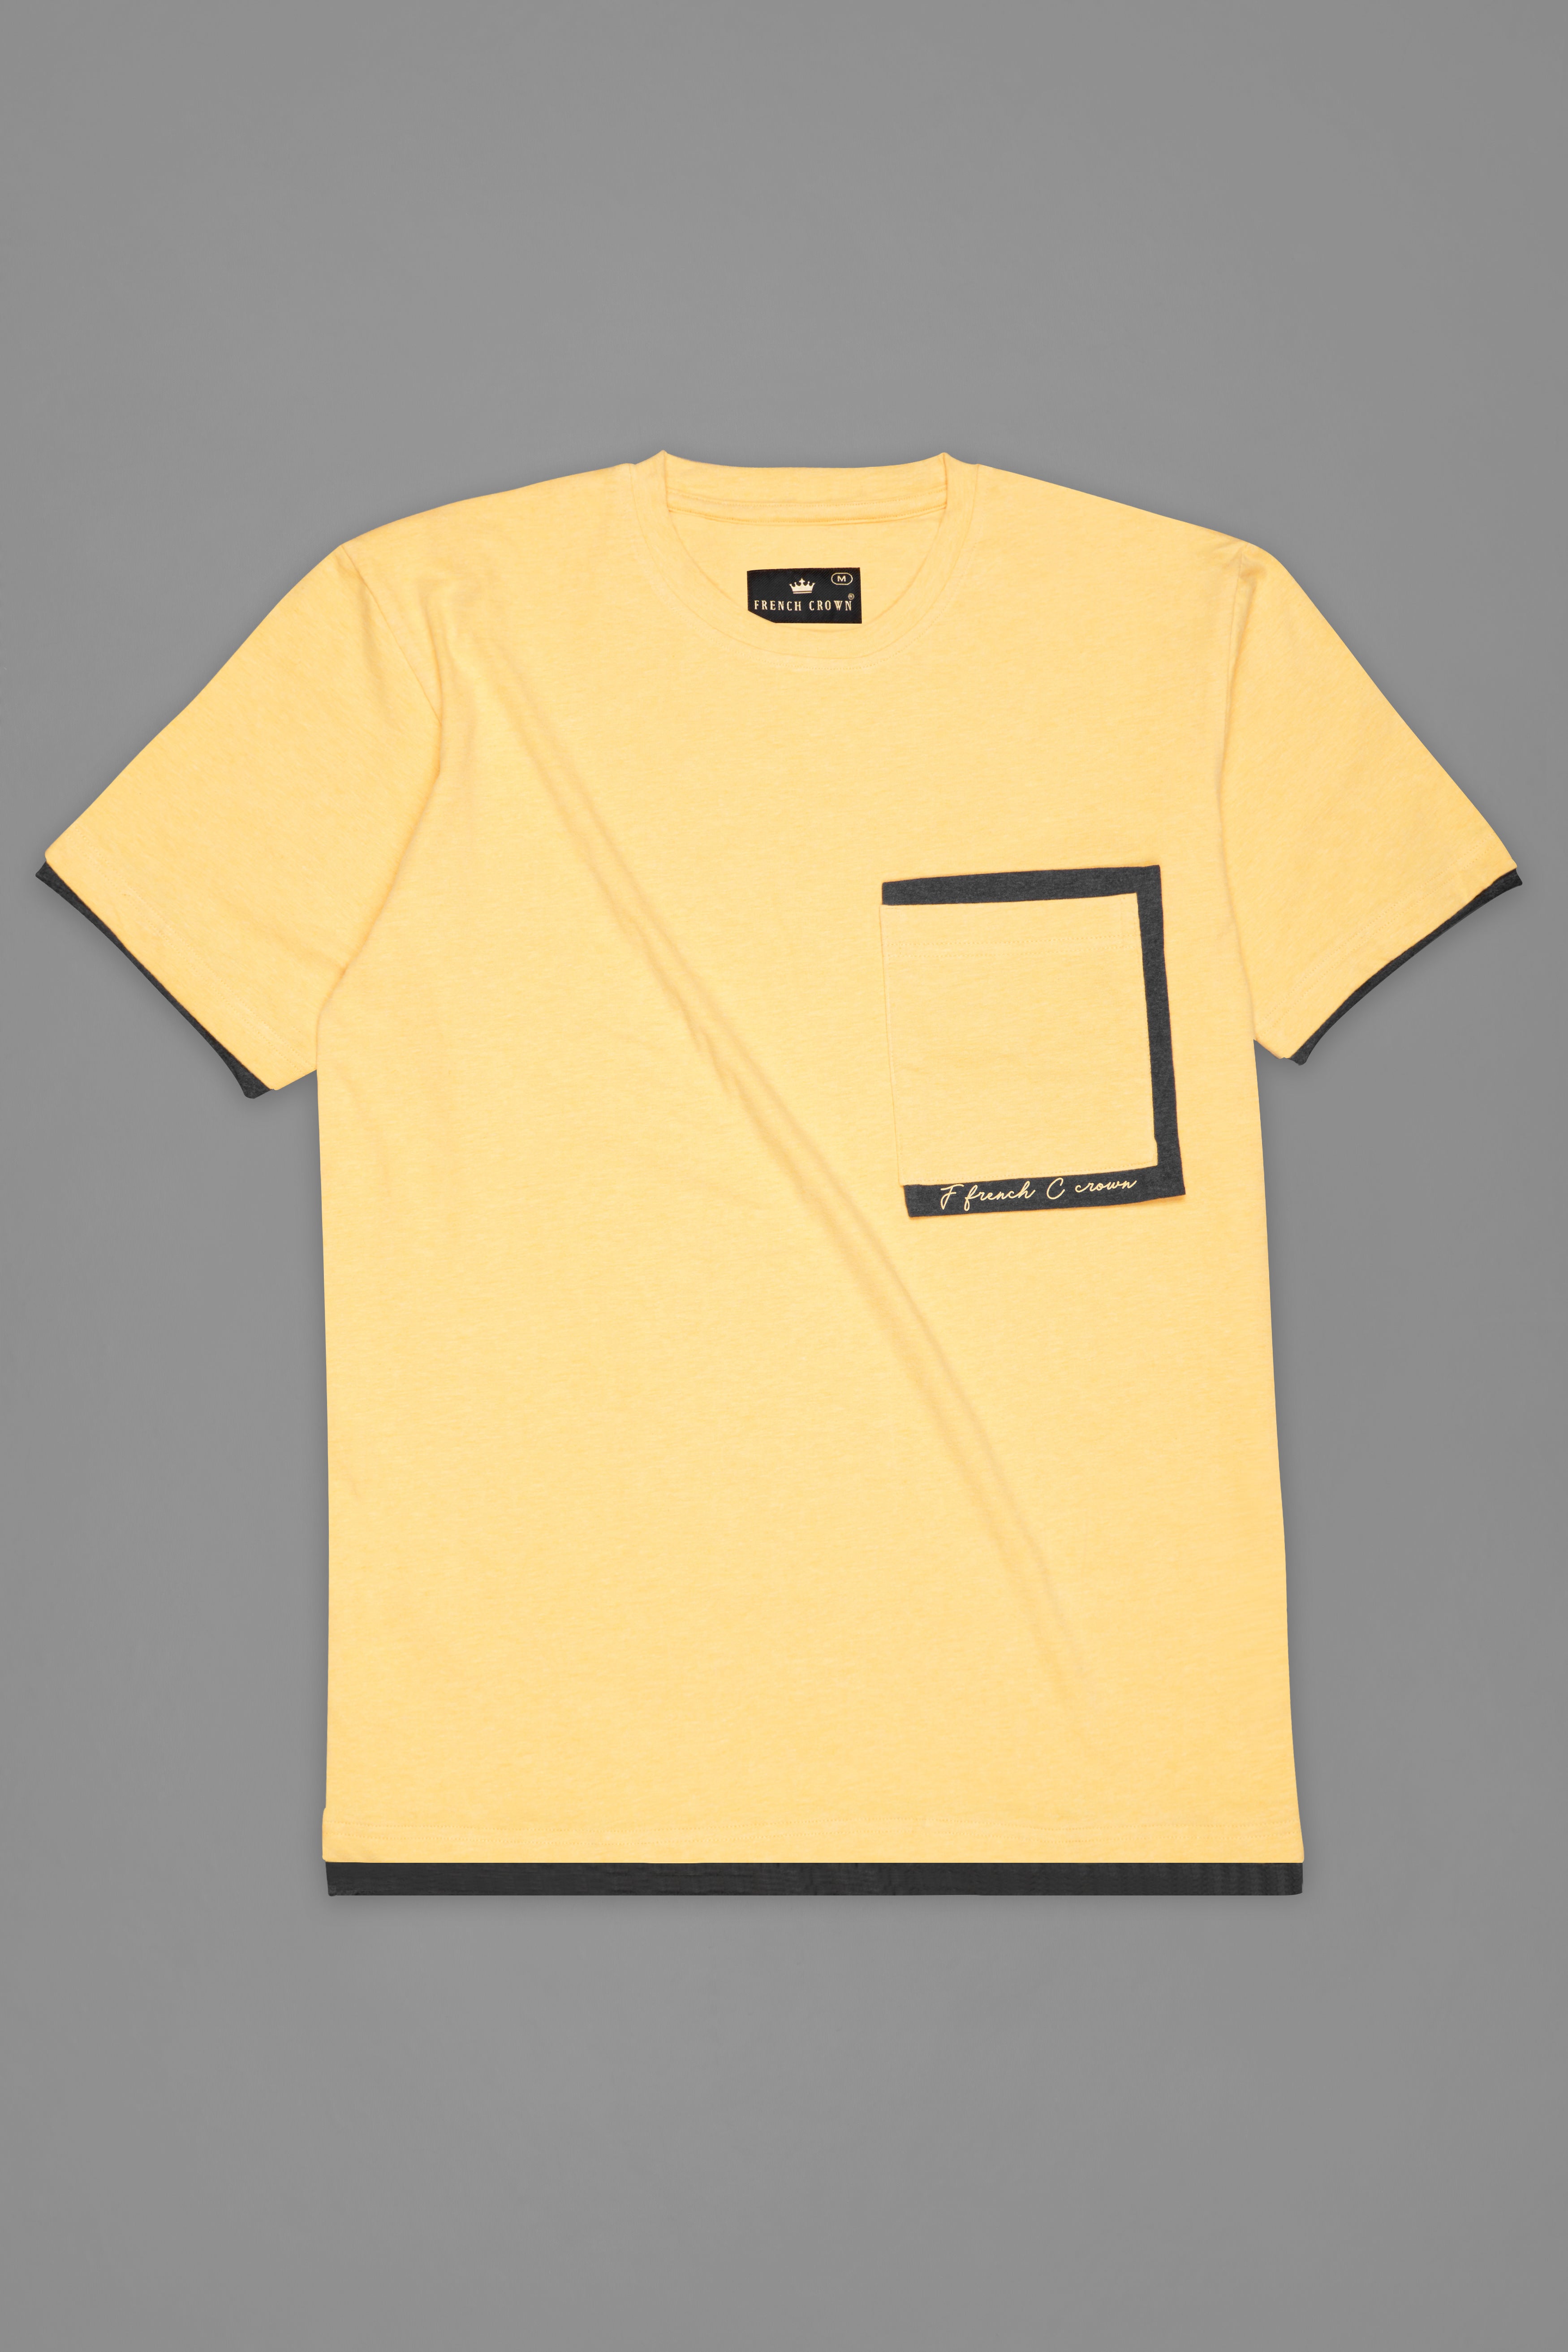 Marzipan Yellow Premium Cotton Jersey T-Shirt TS901-S, TS901-M, TS901-L, TS901-XL, TS901-XXL